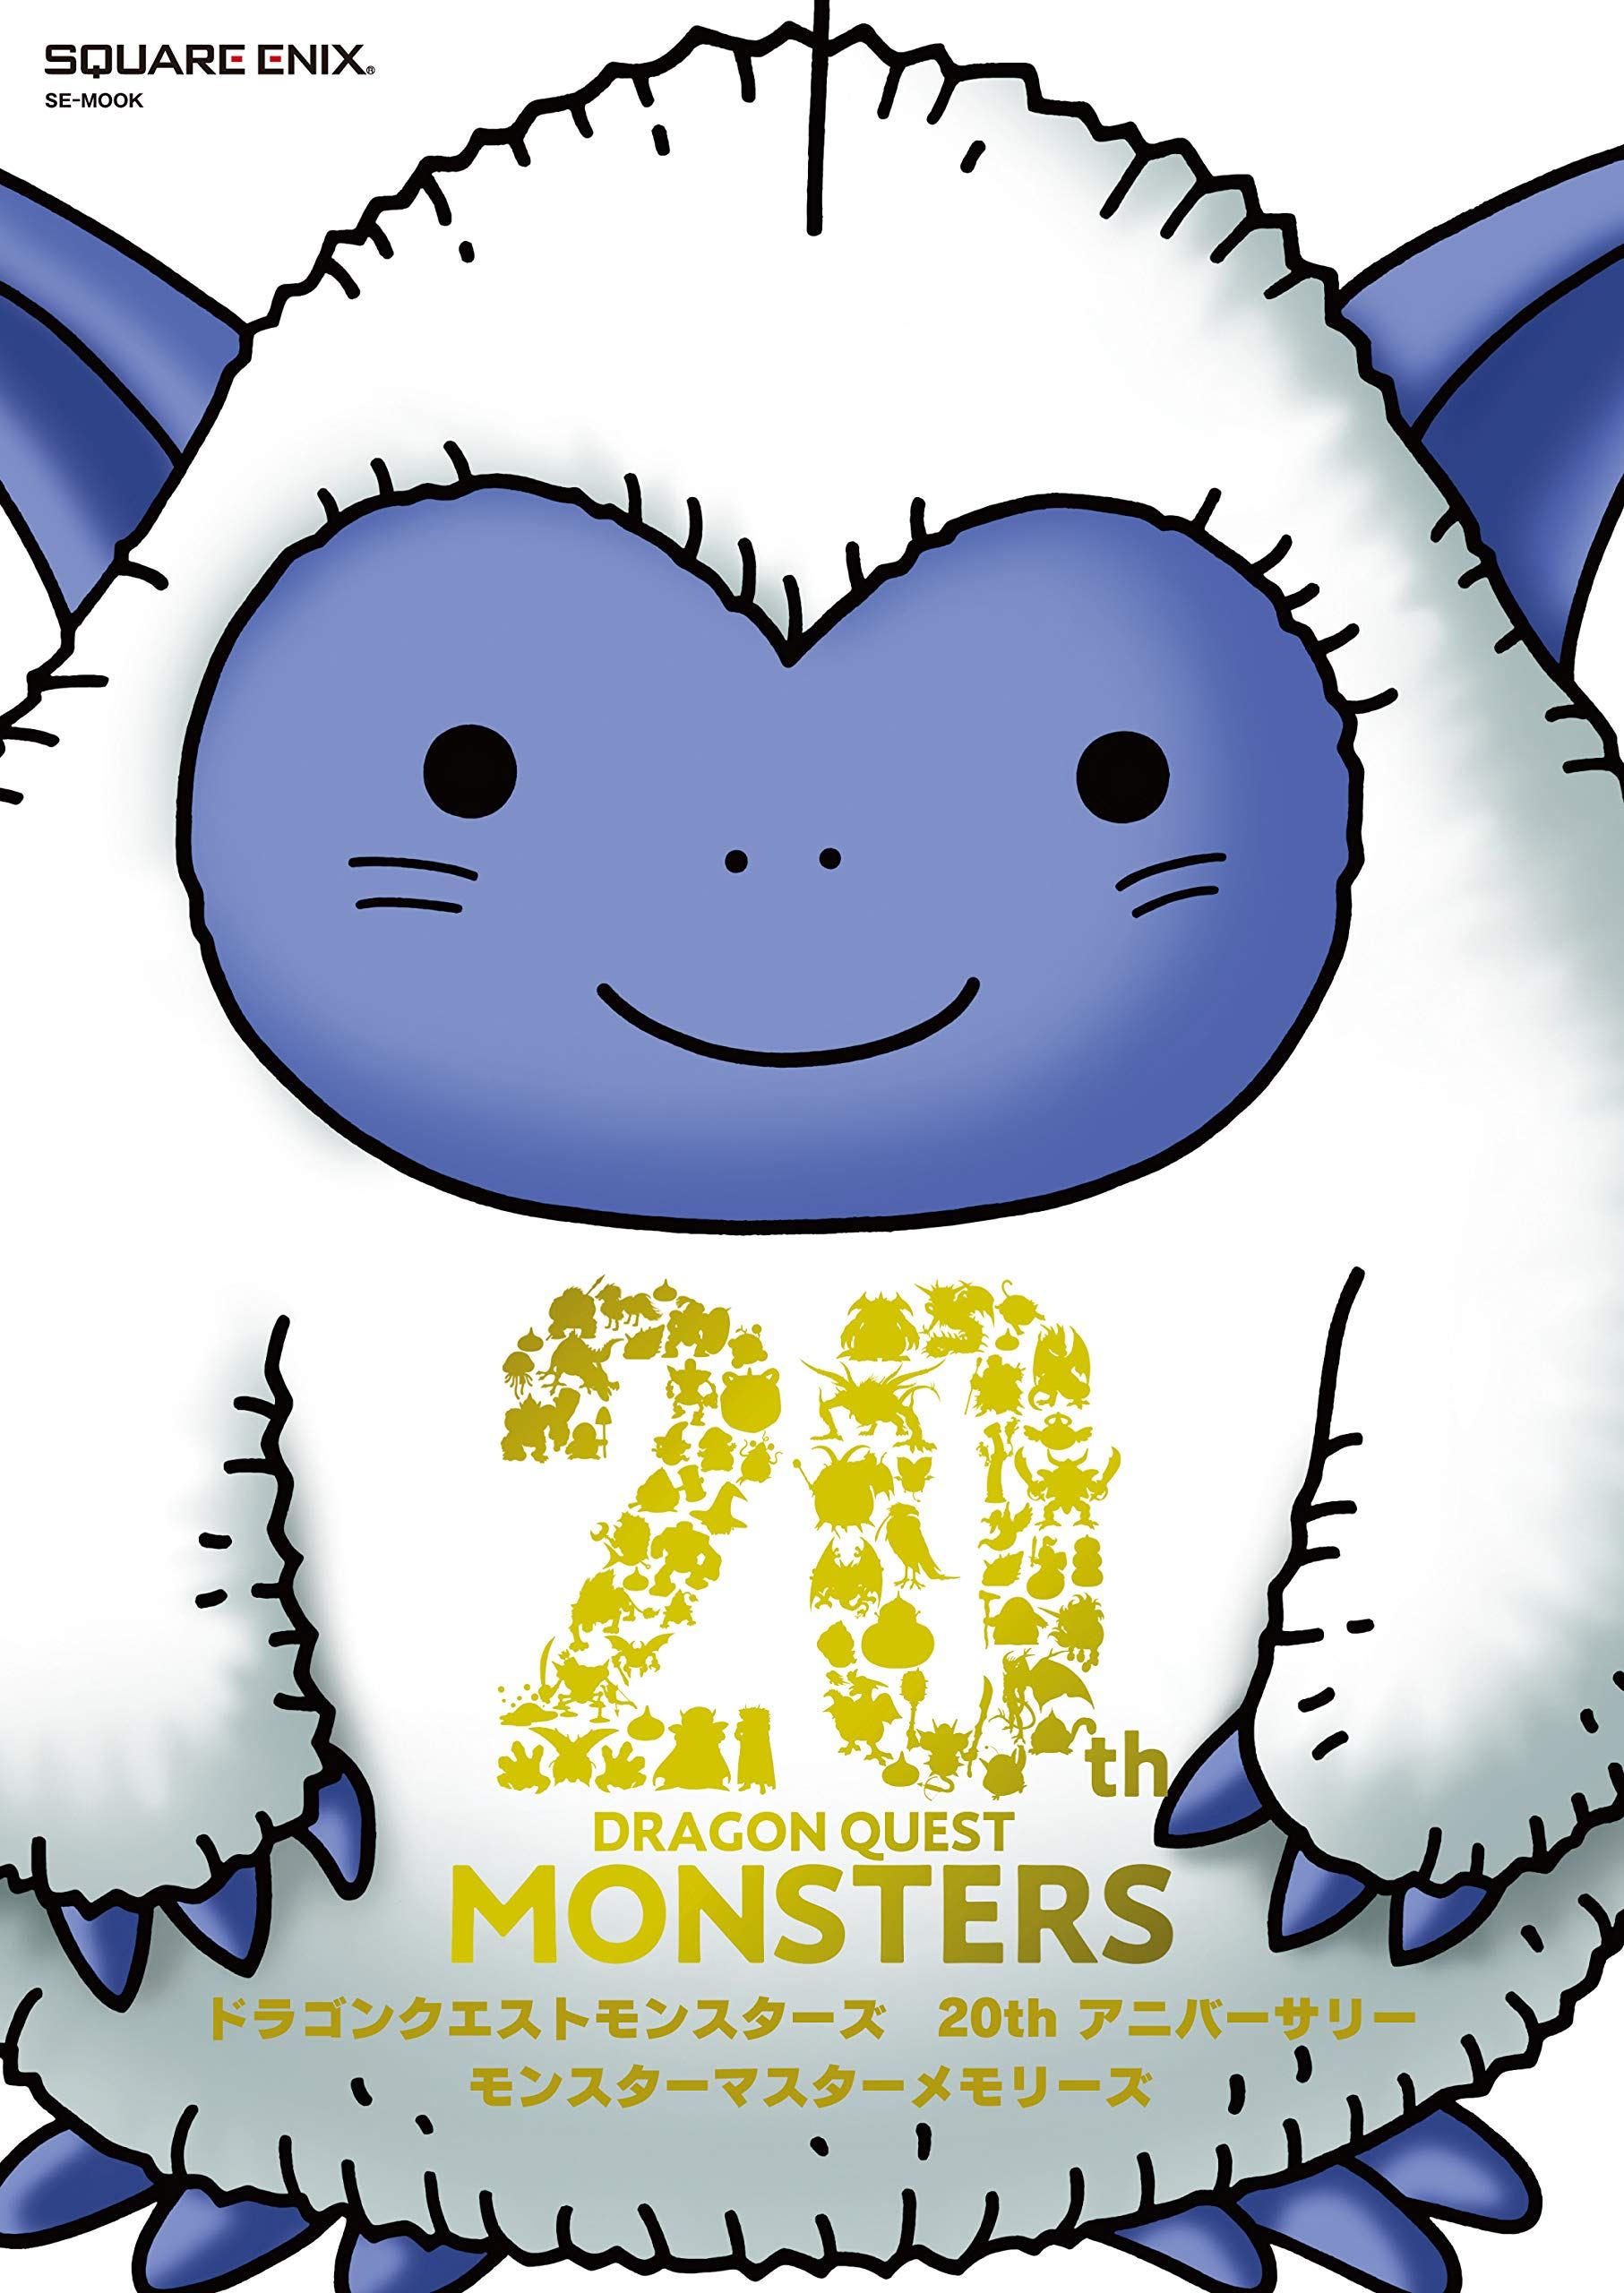 Dragon Quest Monsters: Joker 2 Guide - Magazine 